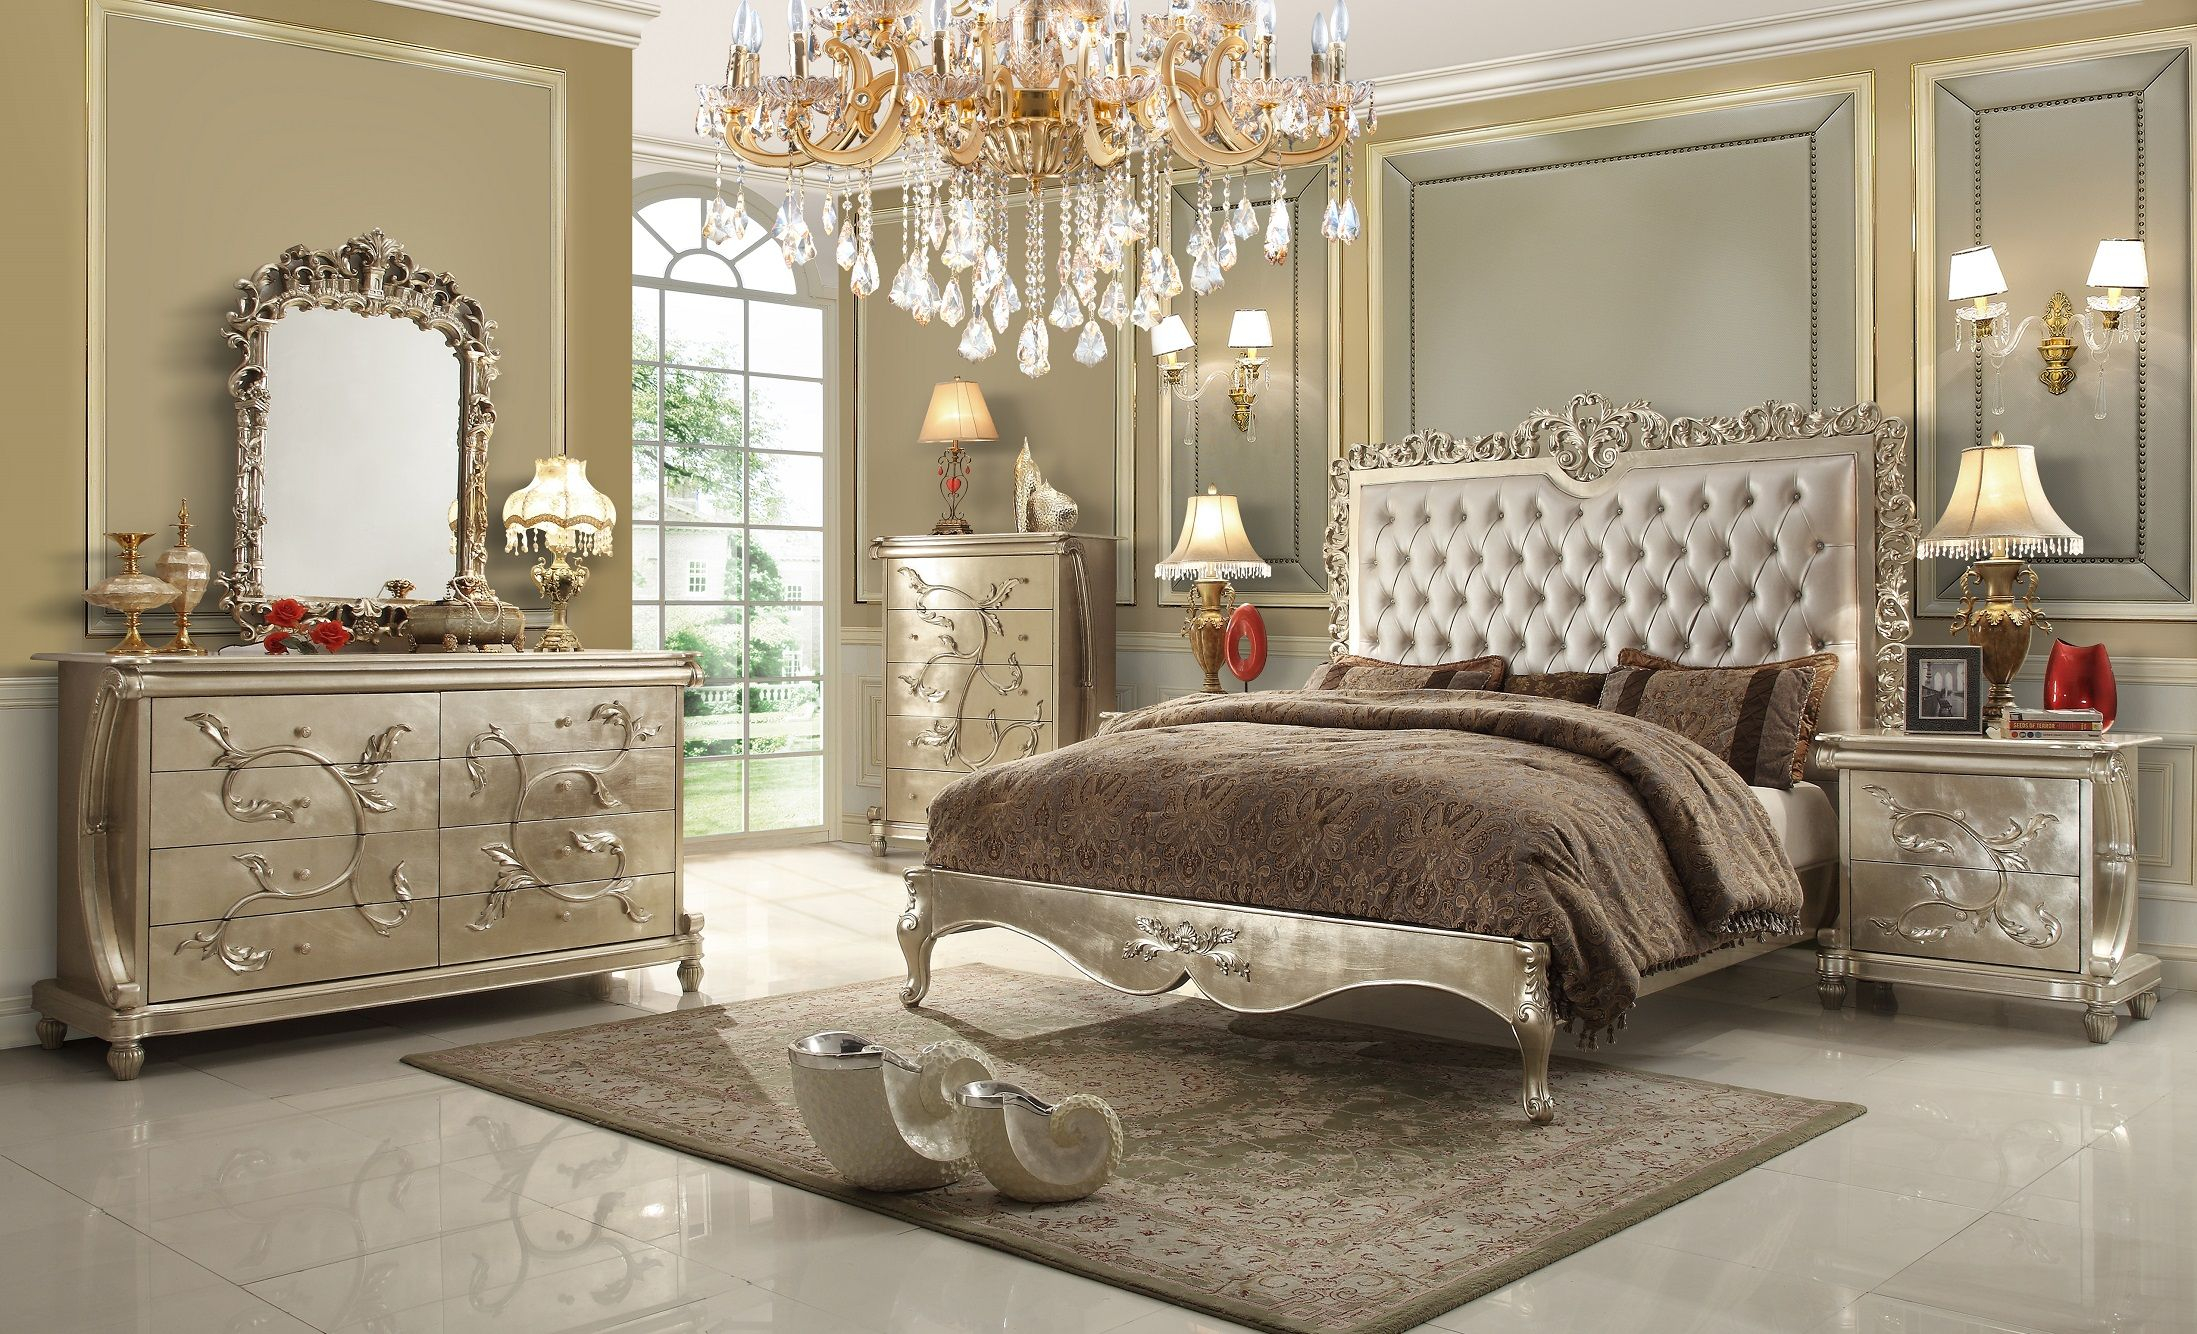 5pc Homey Design Hd 13005 Royal Palace Bedroom Set Boudoir regarding dimensions 2197 X 1334